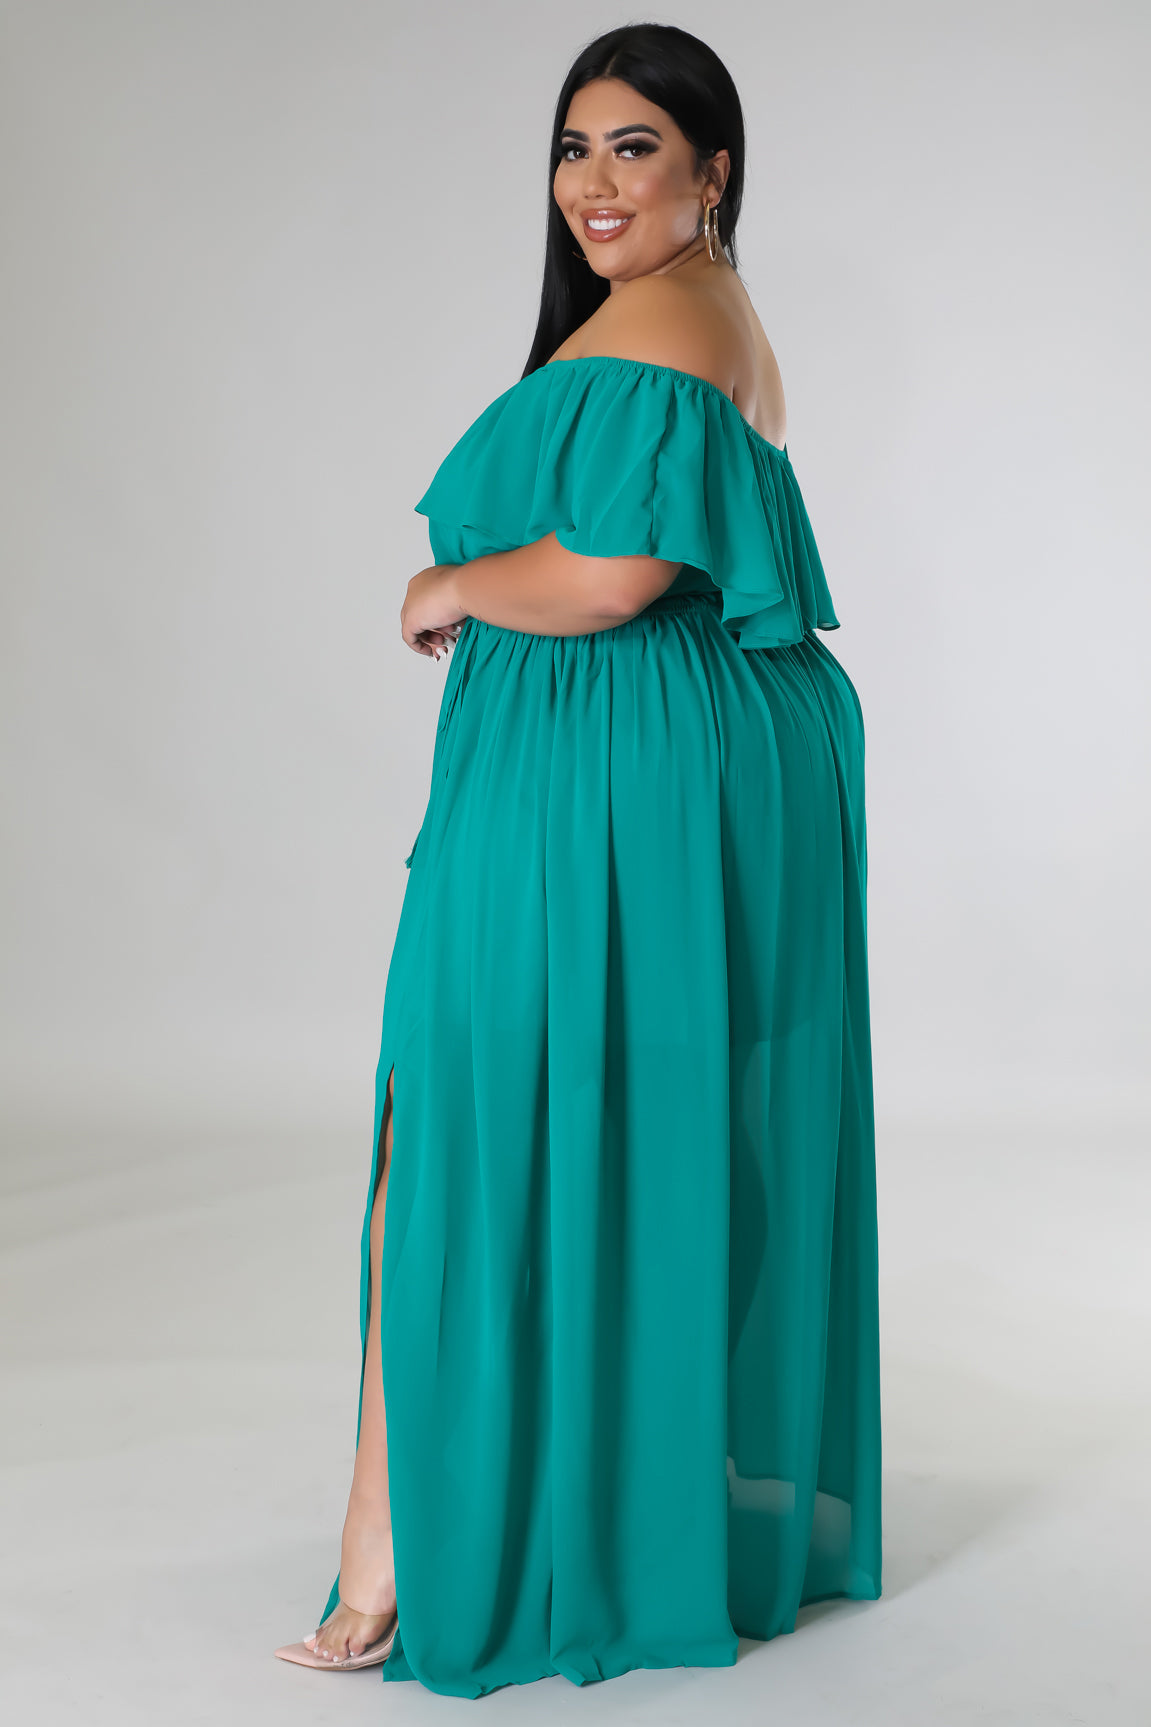 yoyo-reign-plus-size-clothing-Gemstone-Emerald-Off-Shoulder-Maxi-Dress